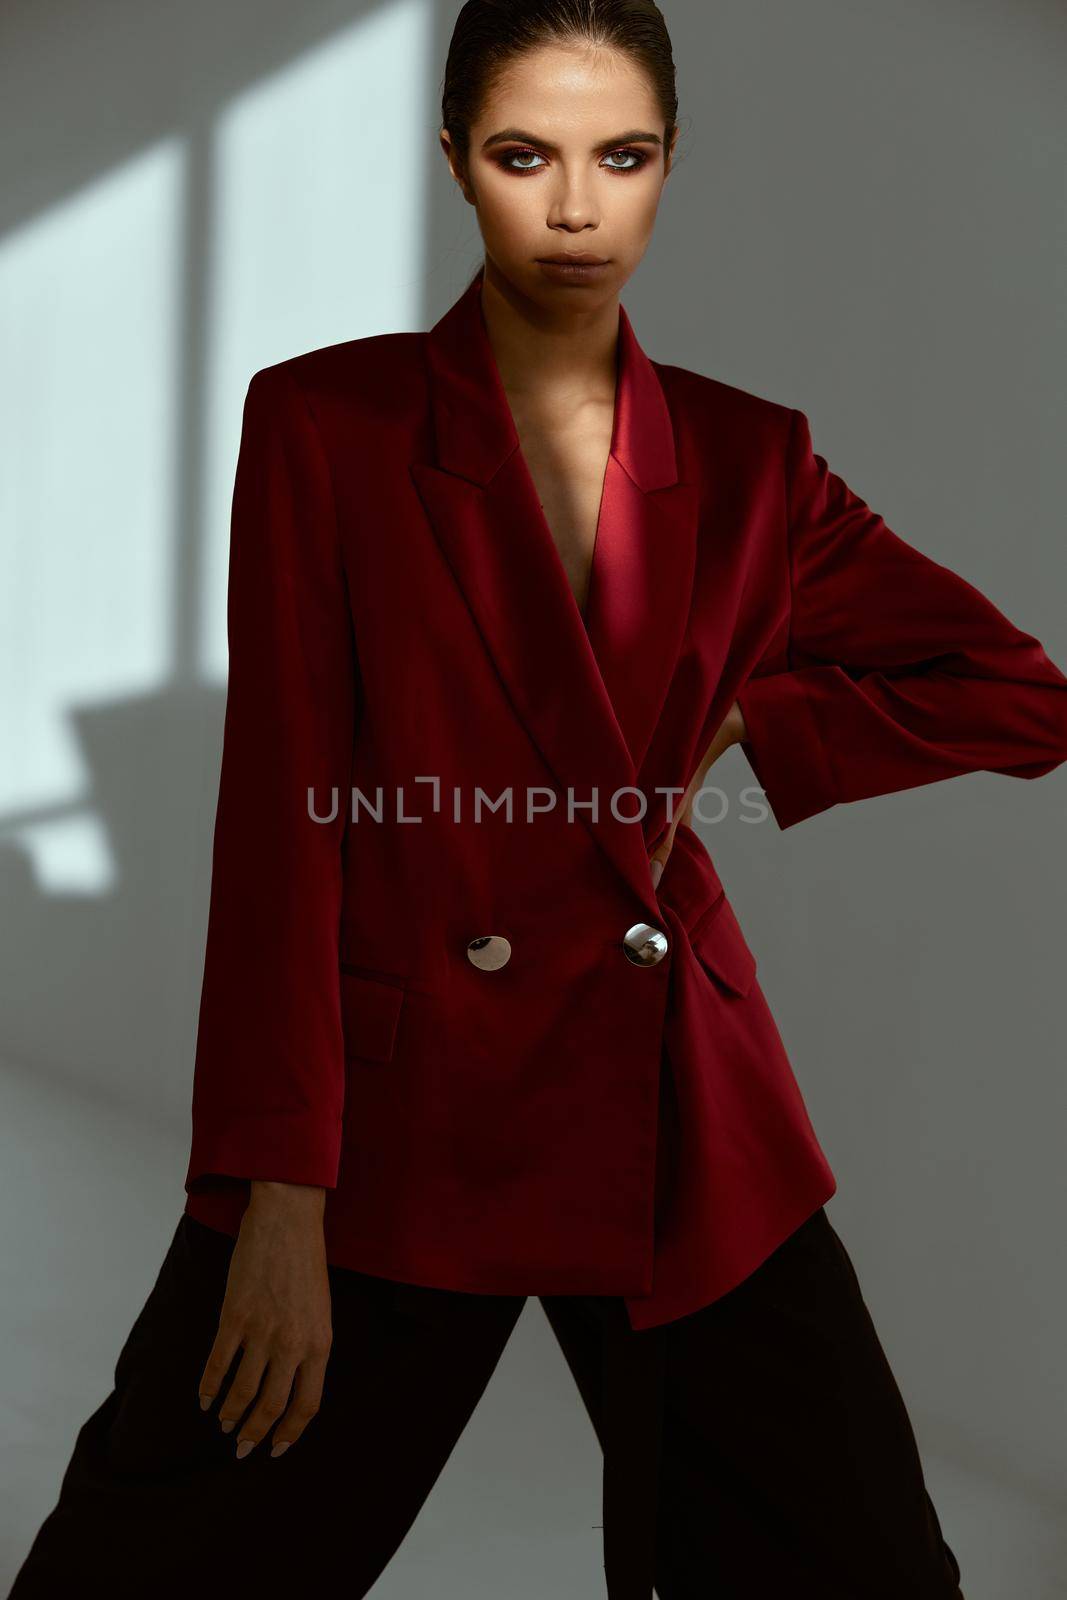 pretty woman in red blazer studio fashion cropped view. High quality photo